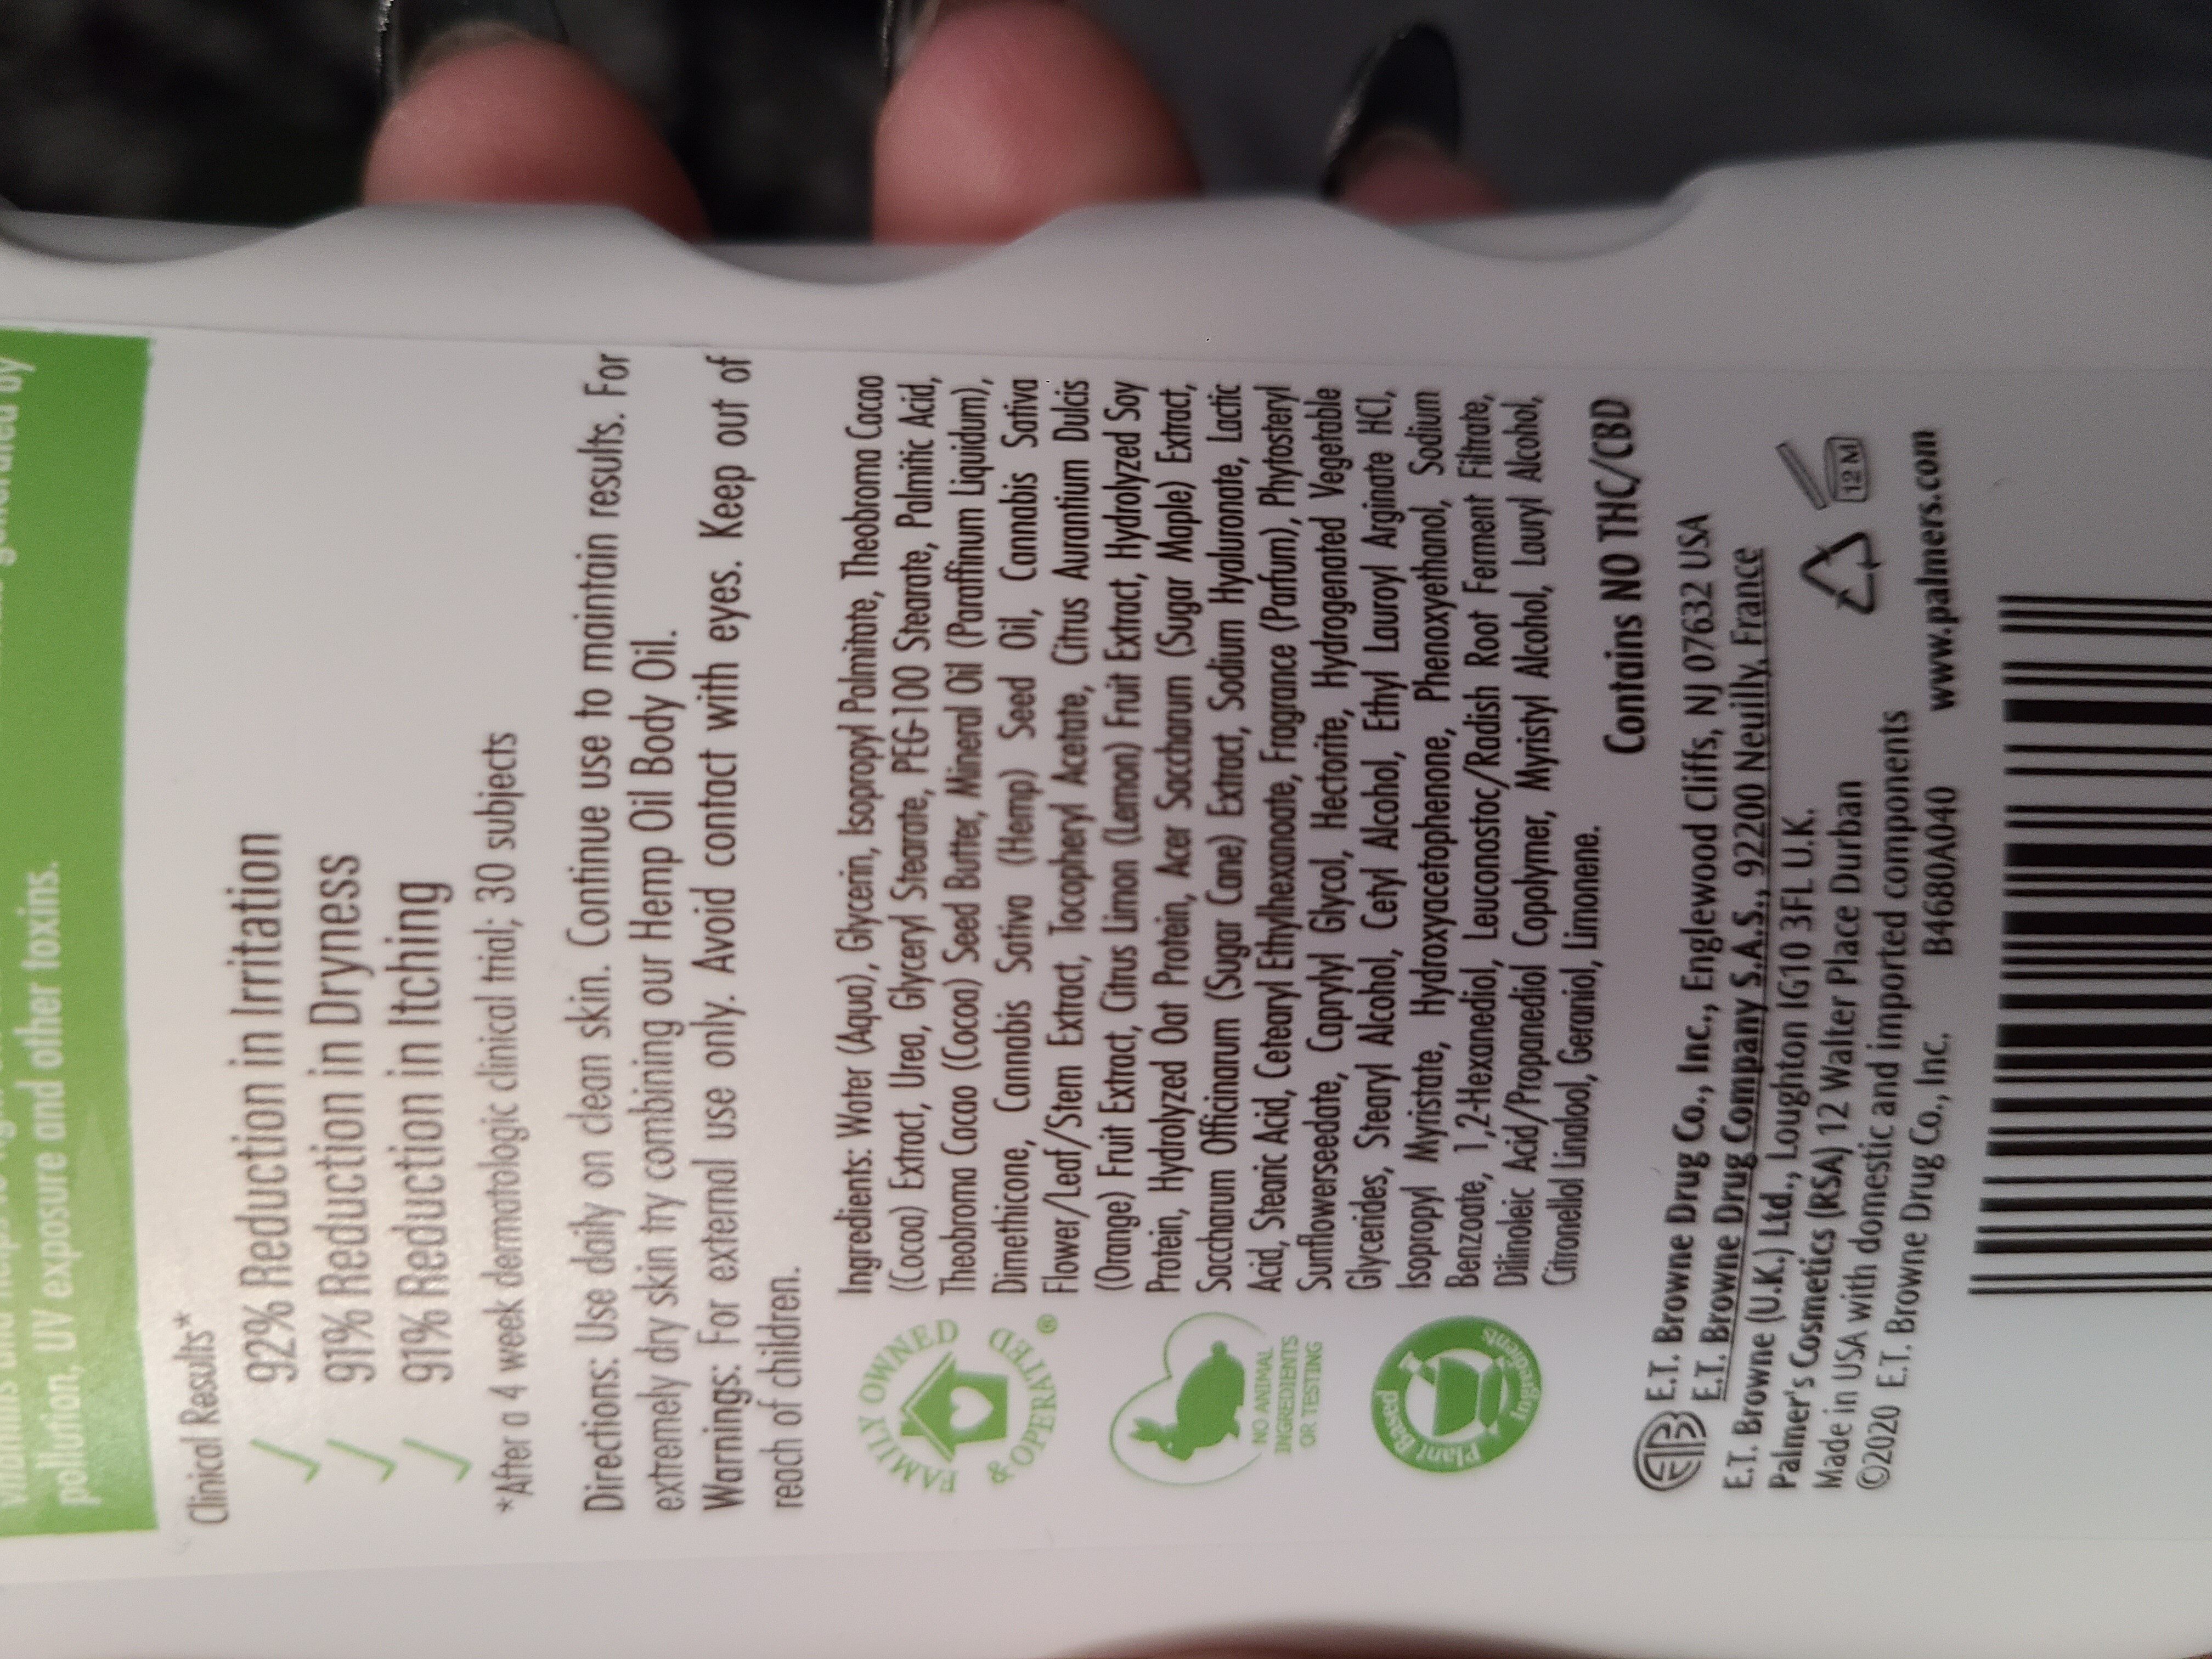 palmers hemp oil relief body lotion - Ingredients - en